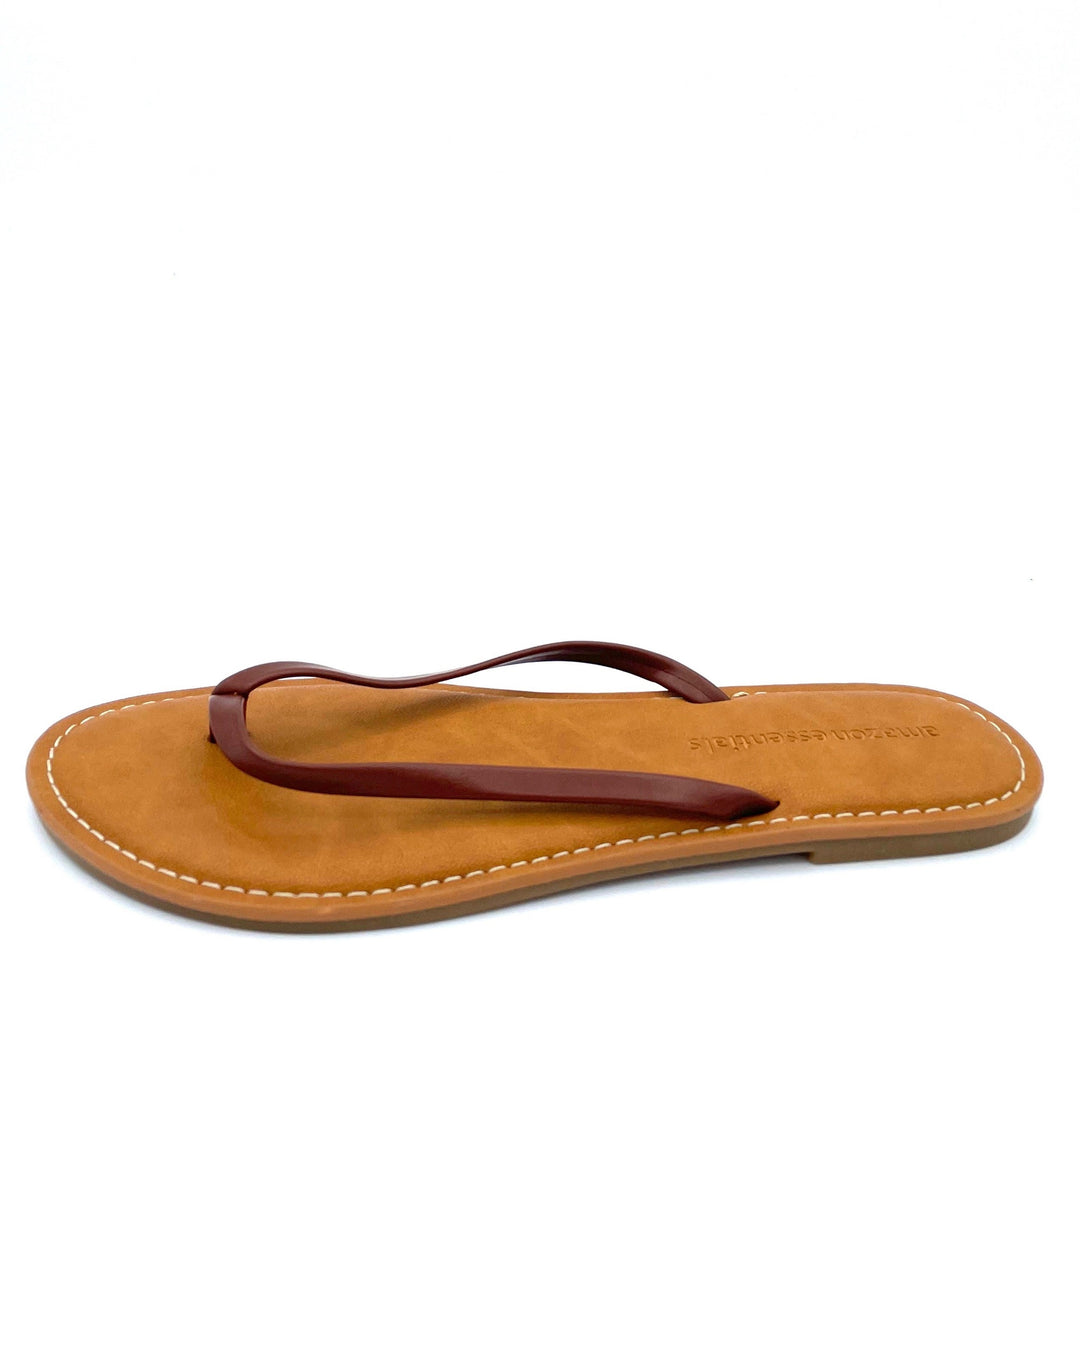 Brown Flip Flops - Size 7